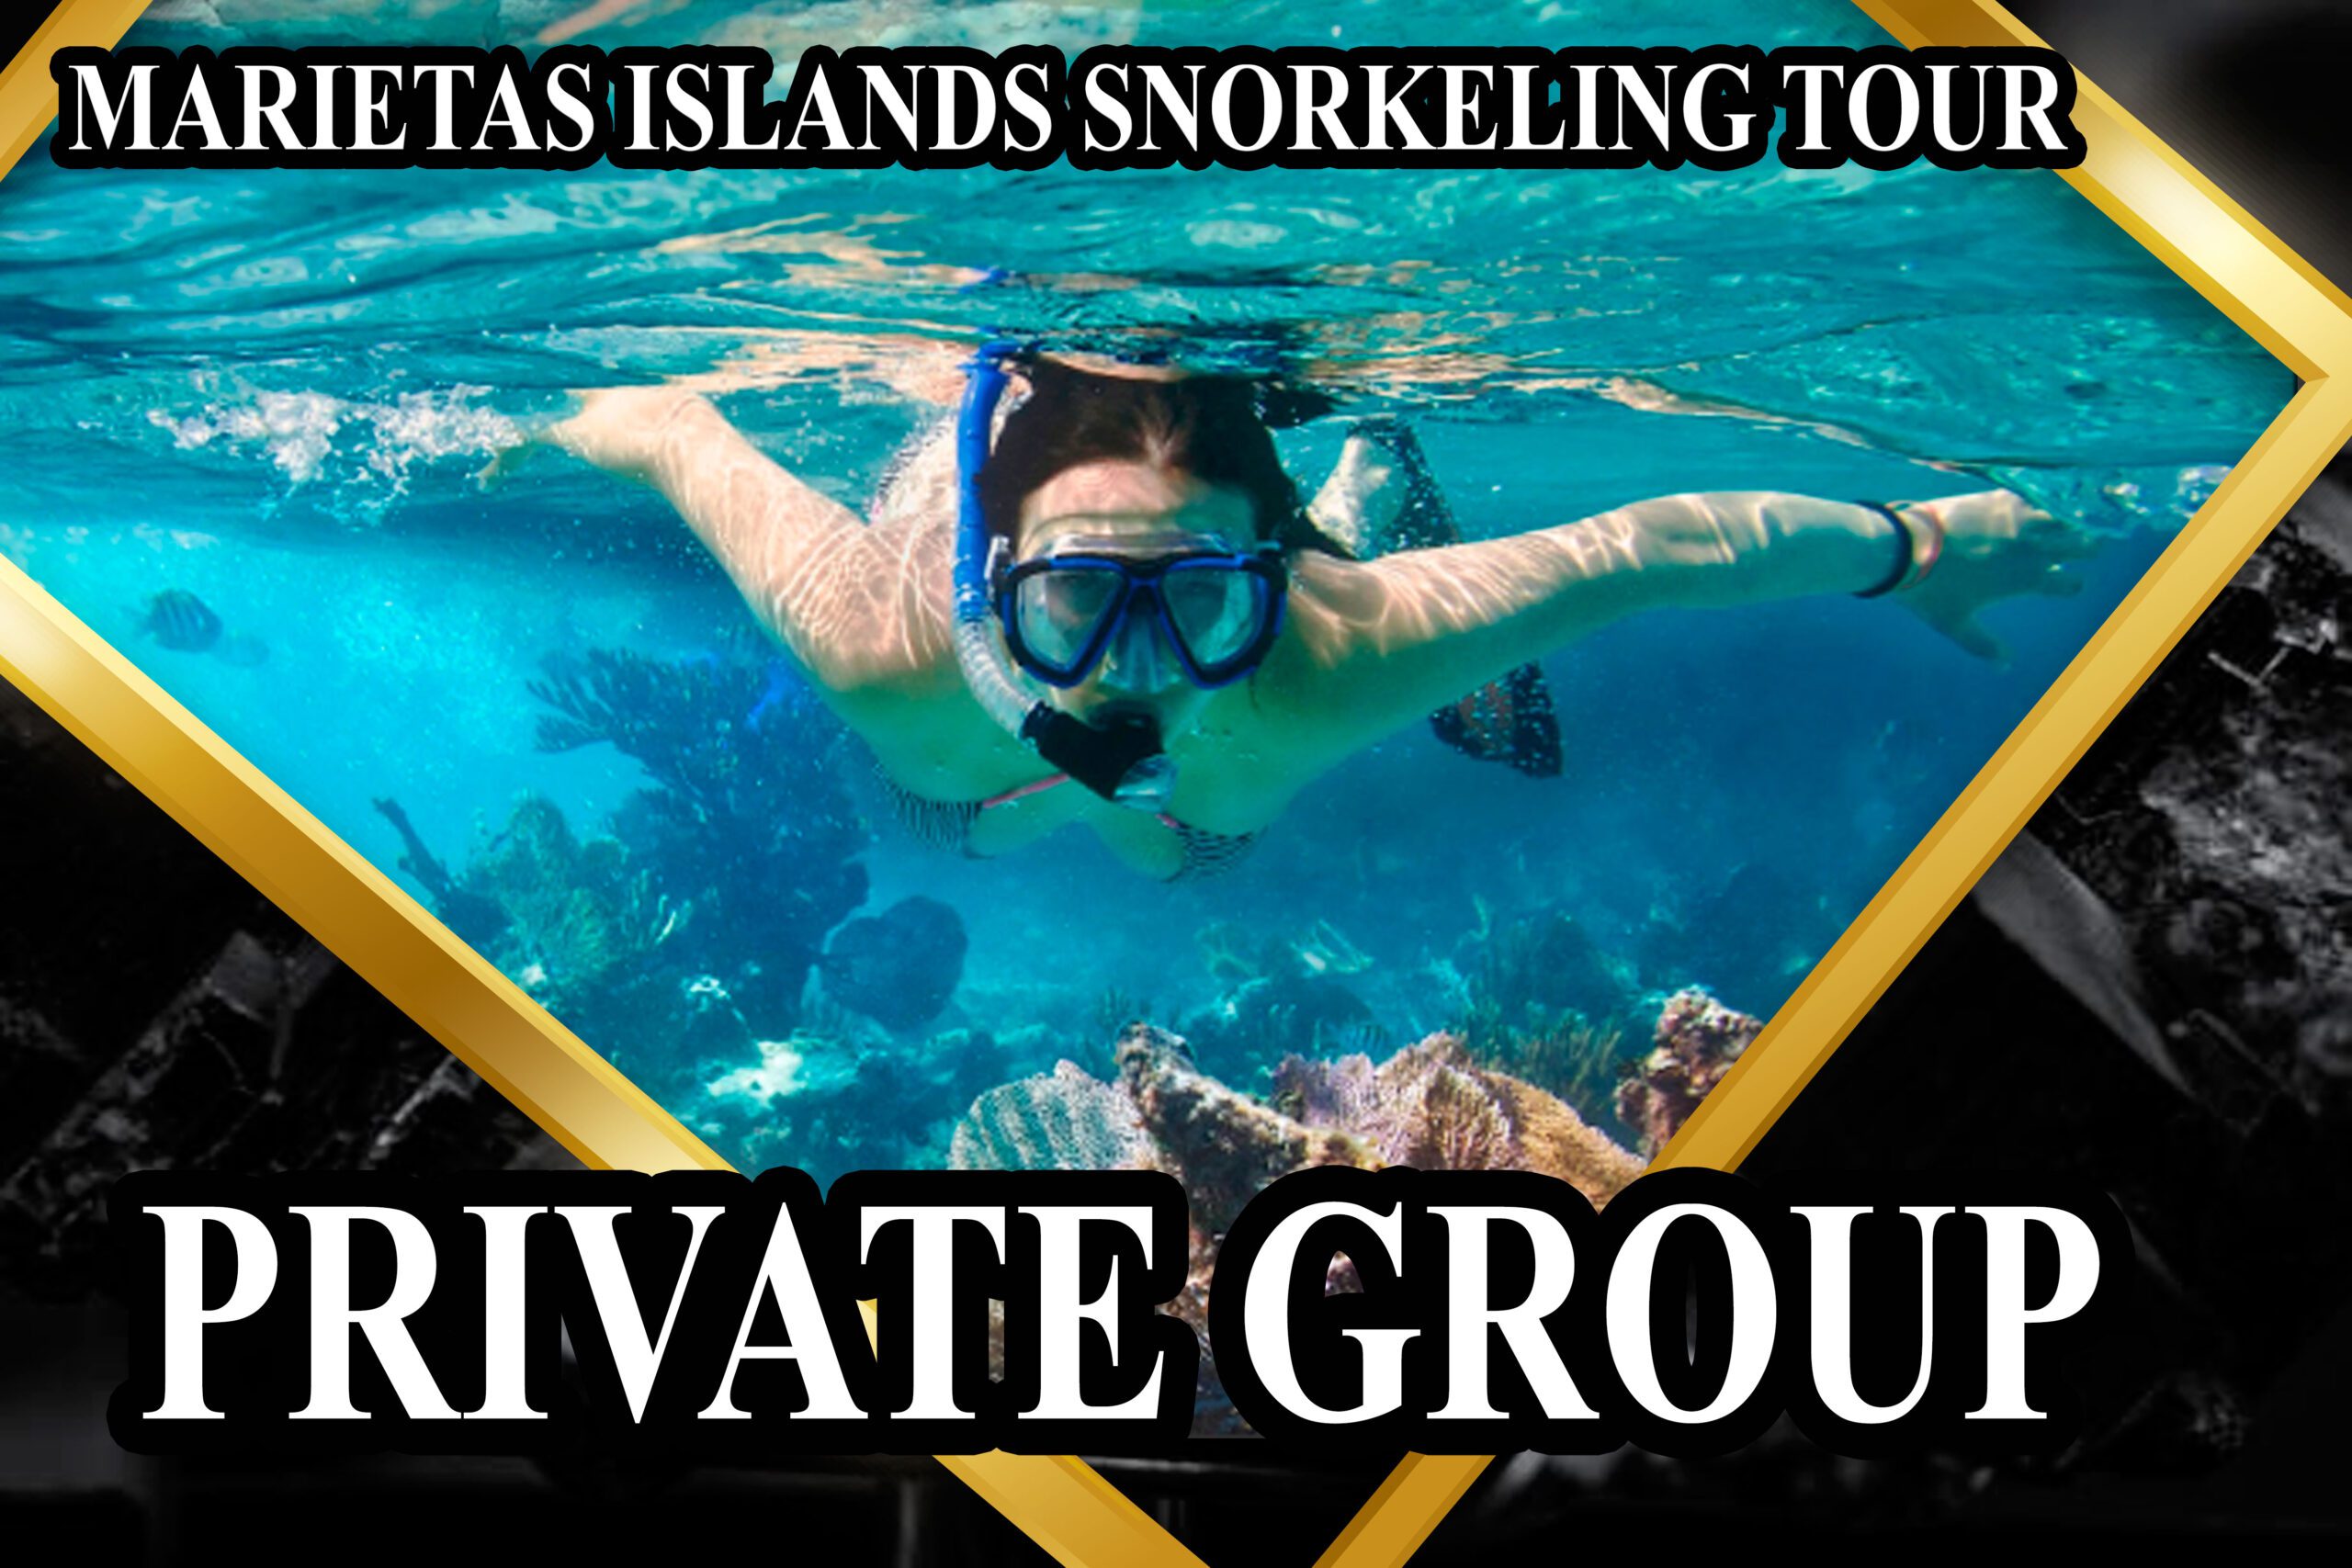 Marietas Islands Snorkeling Tour - Private Group 2 People